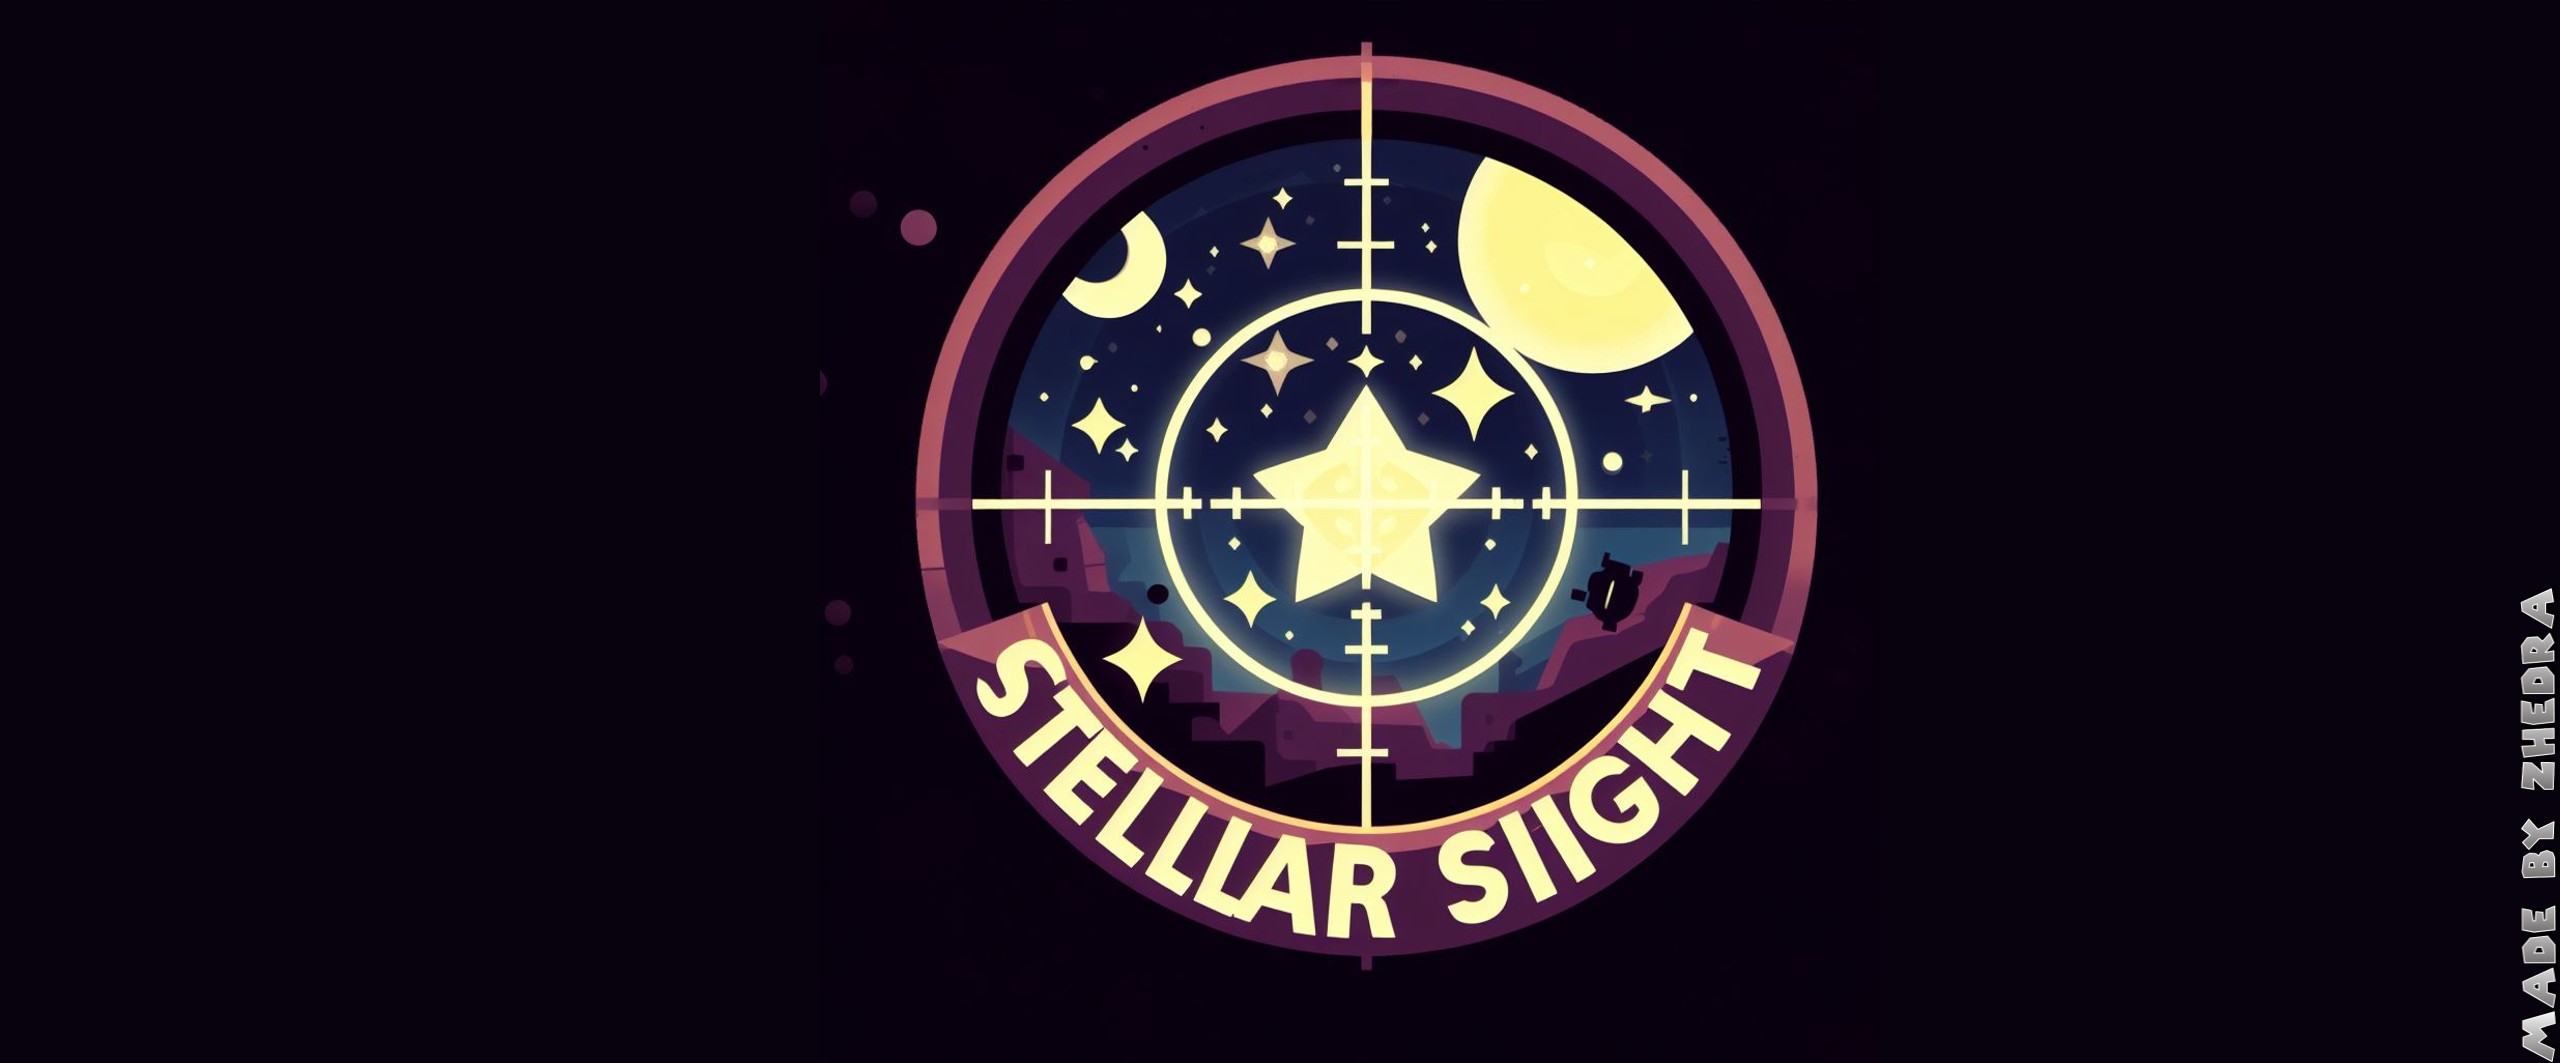 Stellar Sight